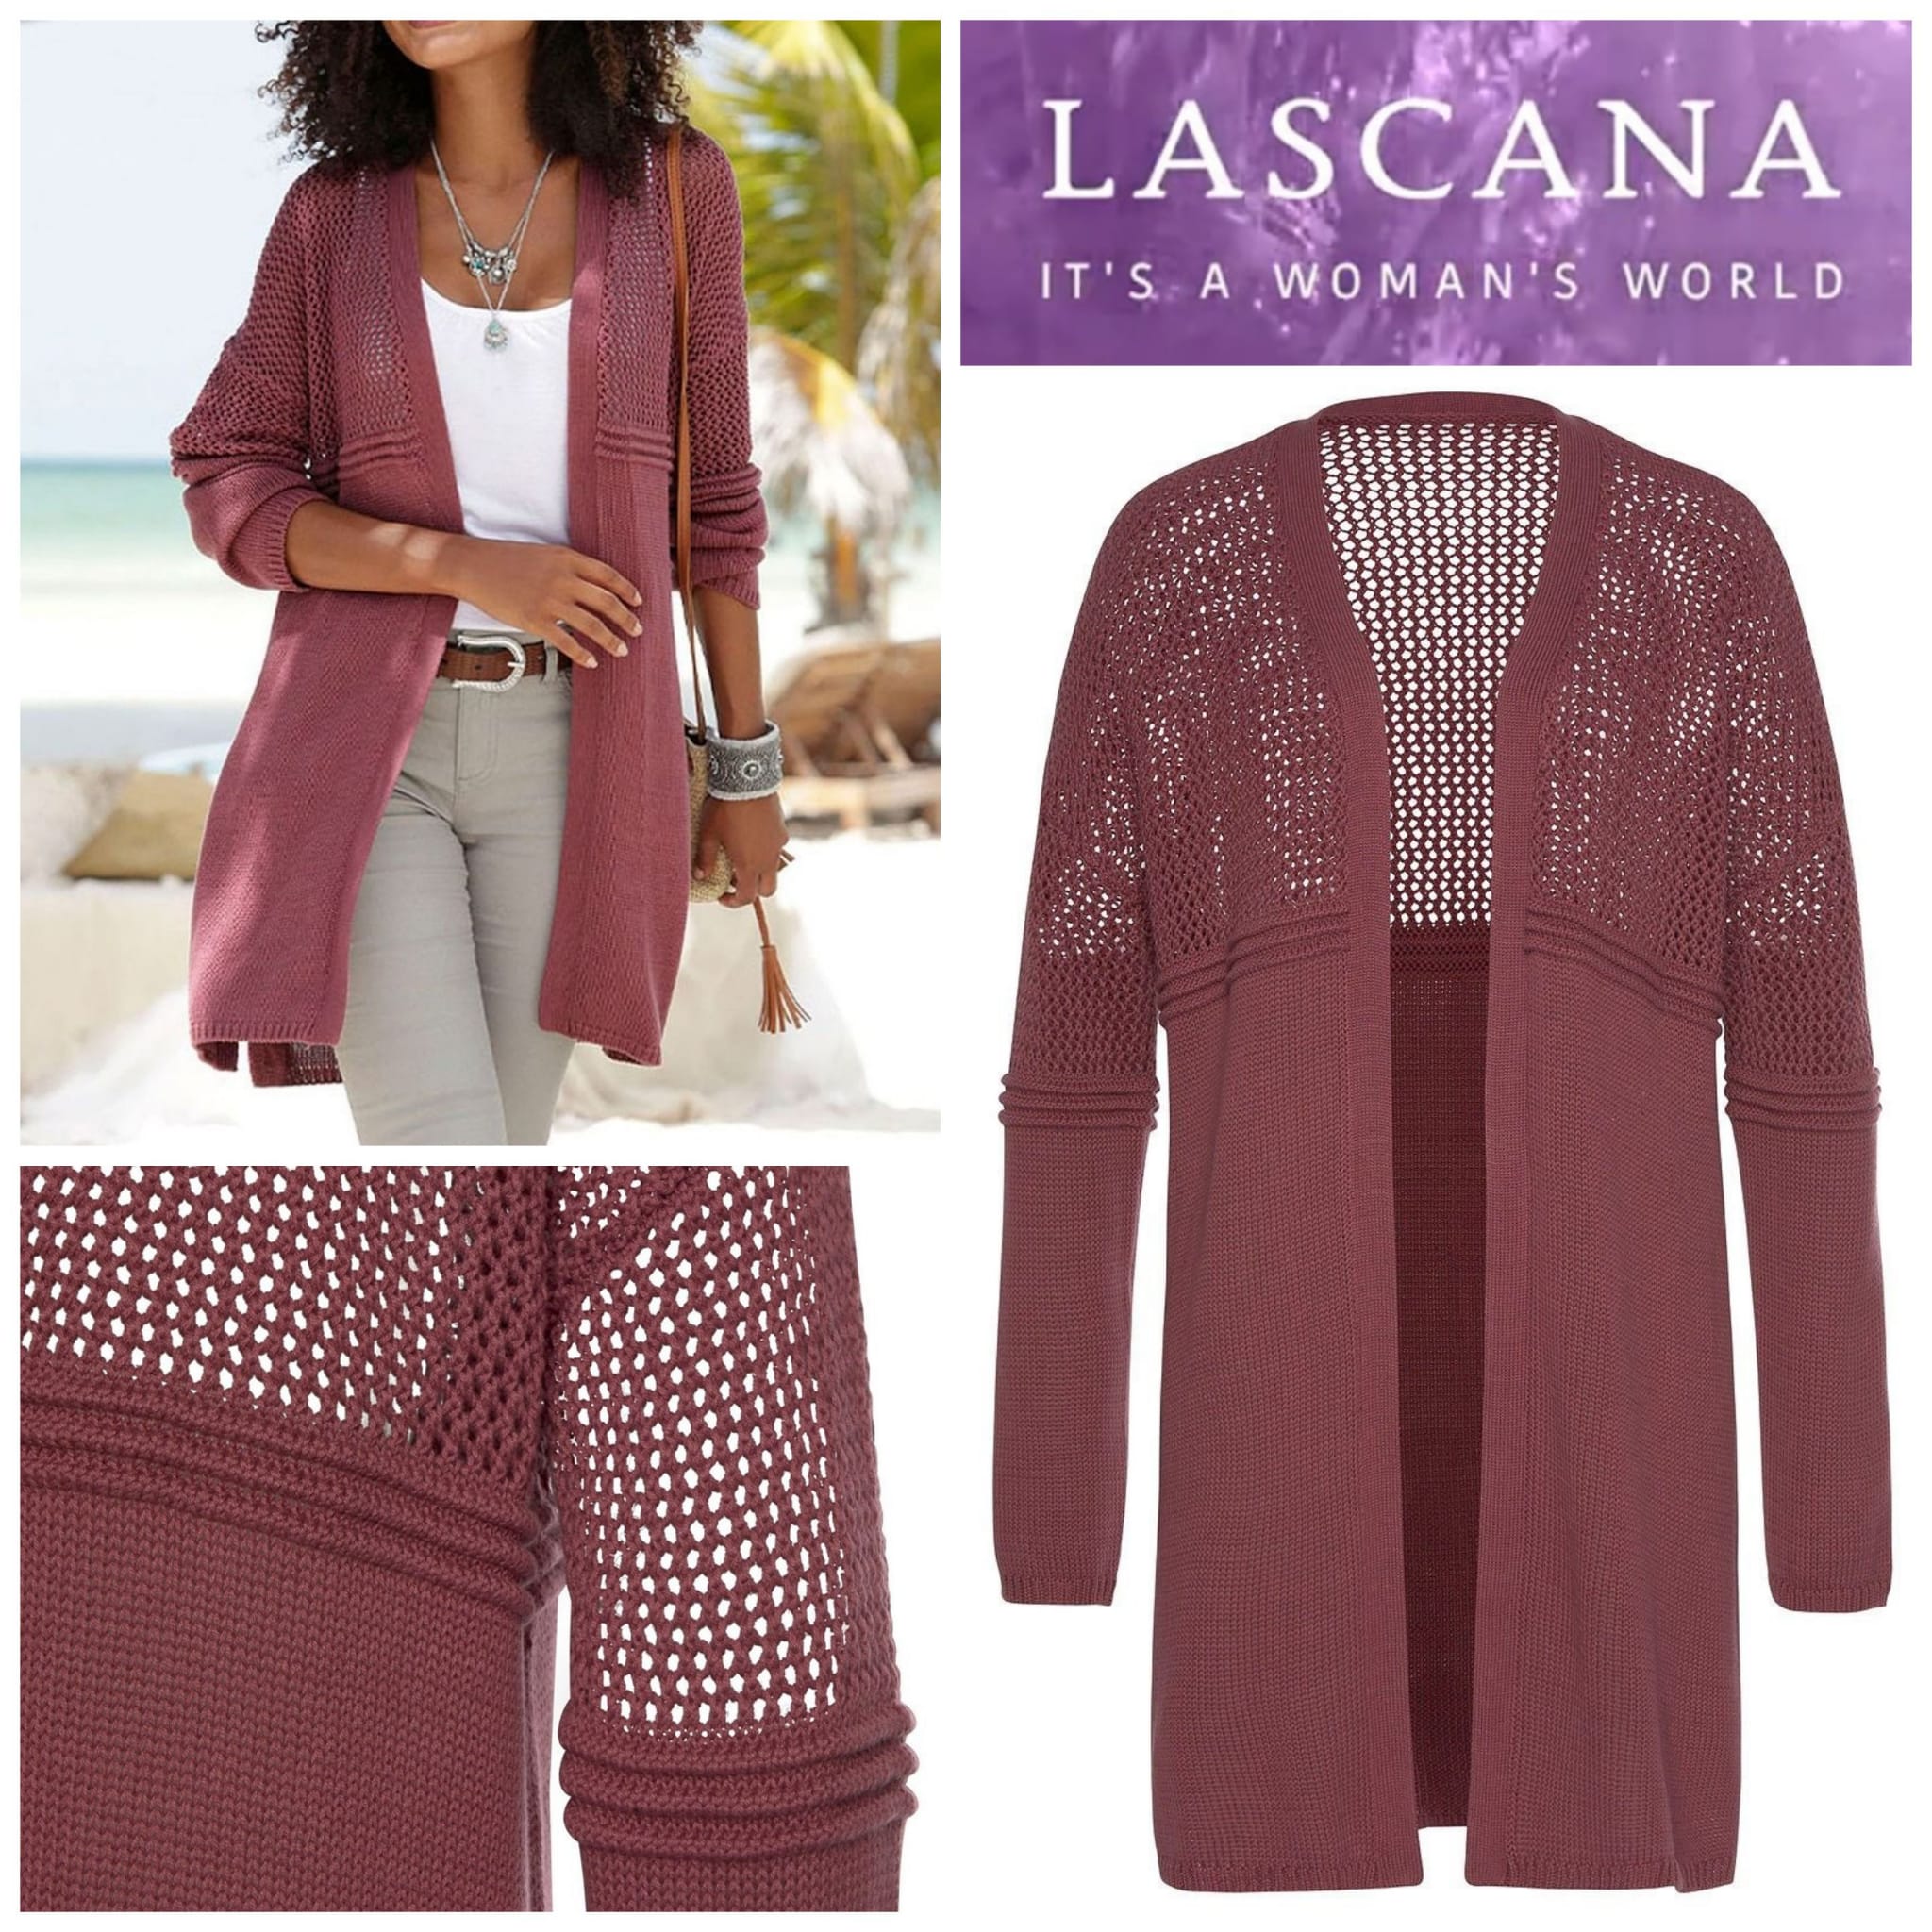 Women's lightweight cardigan from Lascana